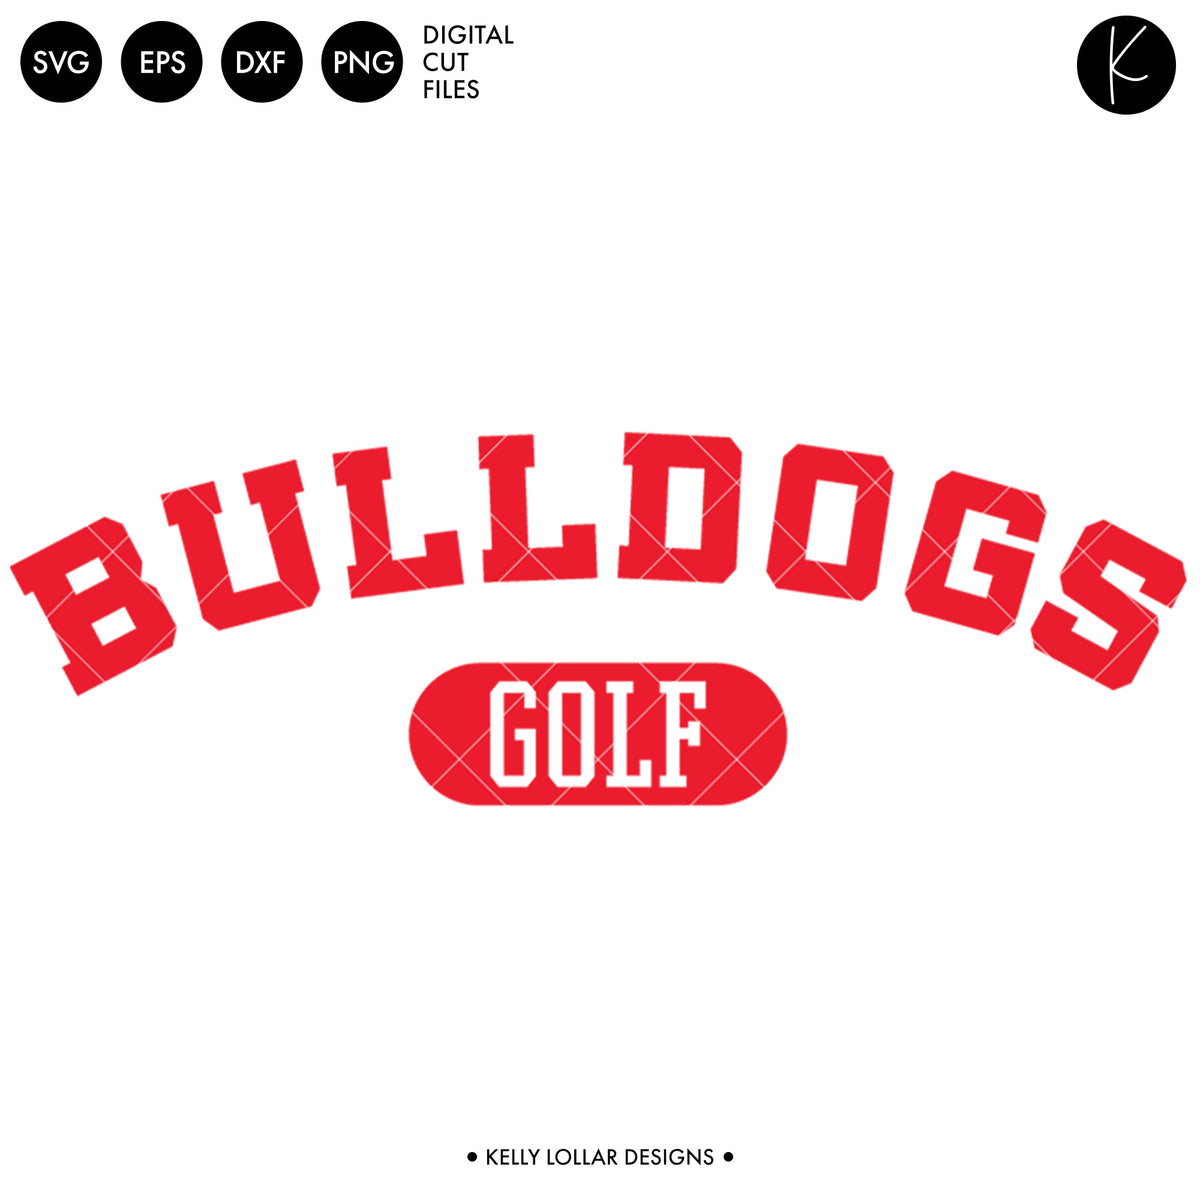 Bulldogs Golf Bundle | SVG DXF EPS PNG Cut Files